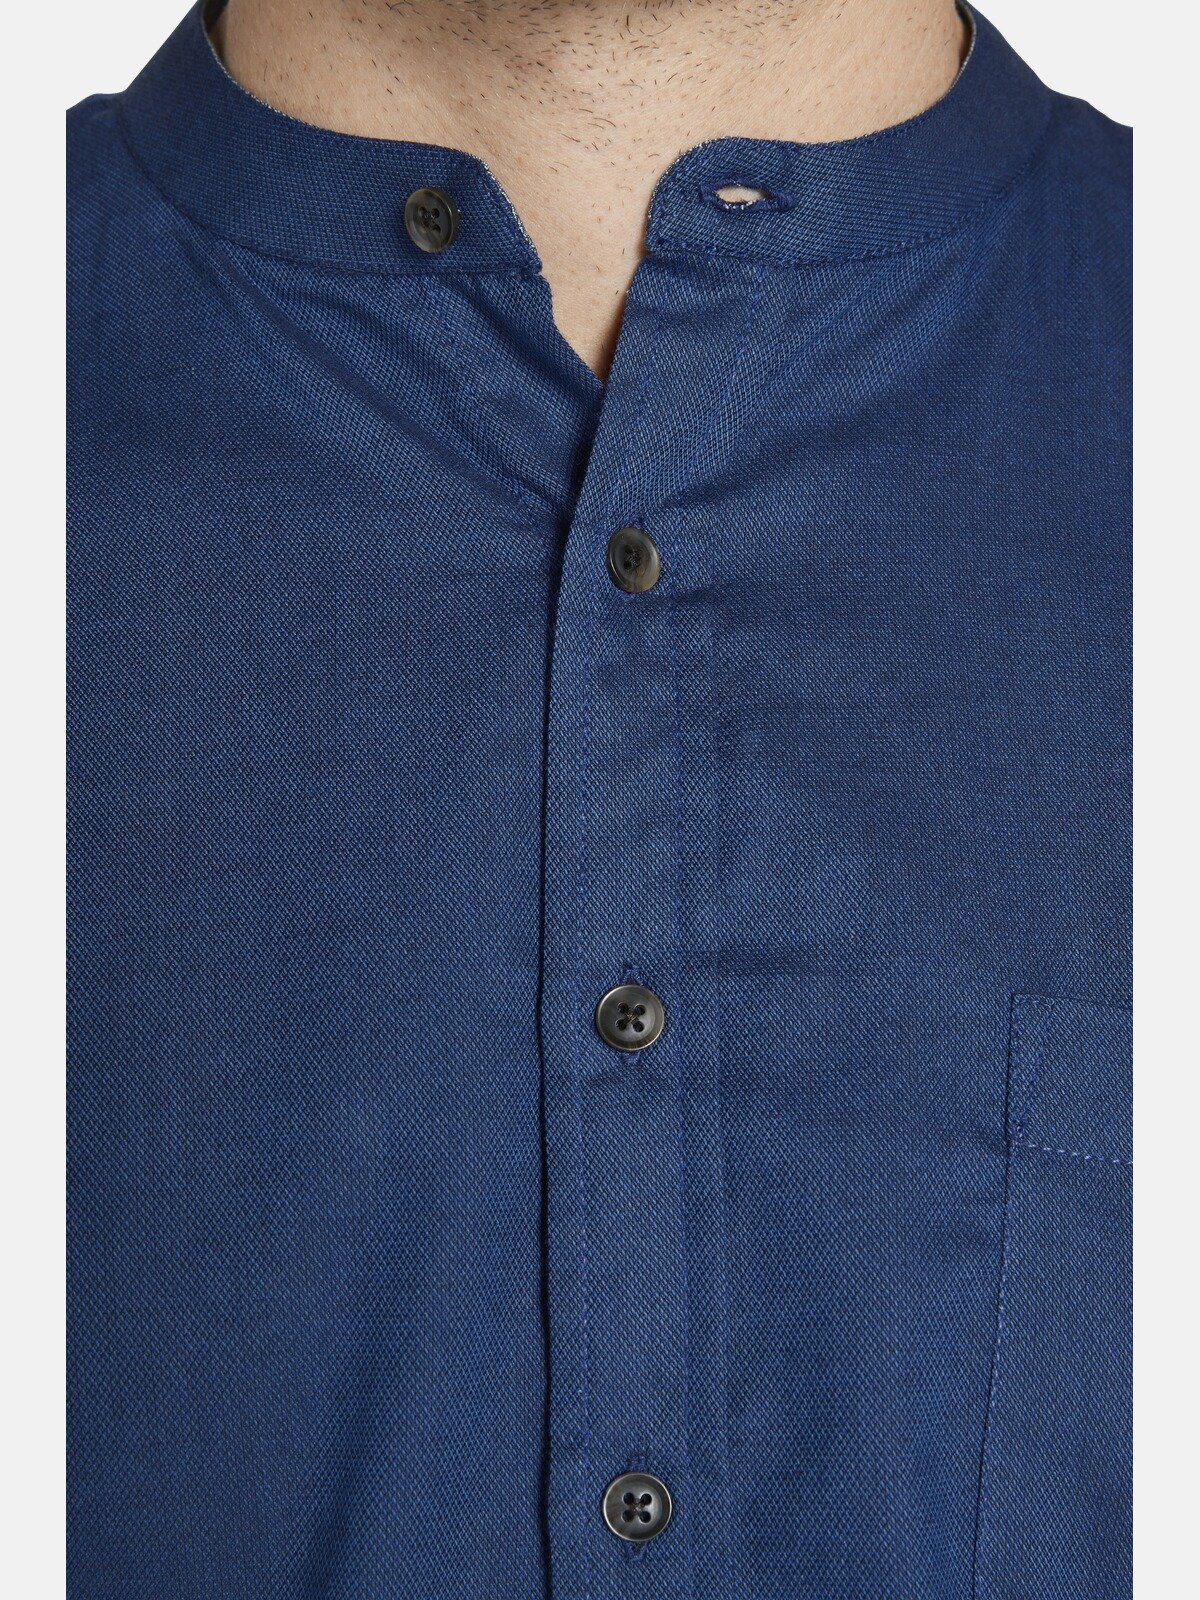 Charles EARL ALEC Strukturware dunkelblau Langarmhemd aus eleganter Colby